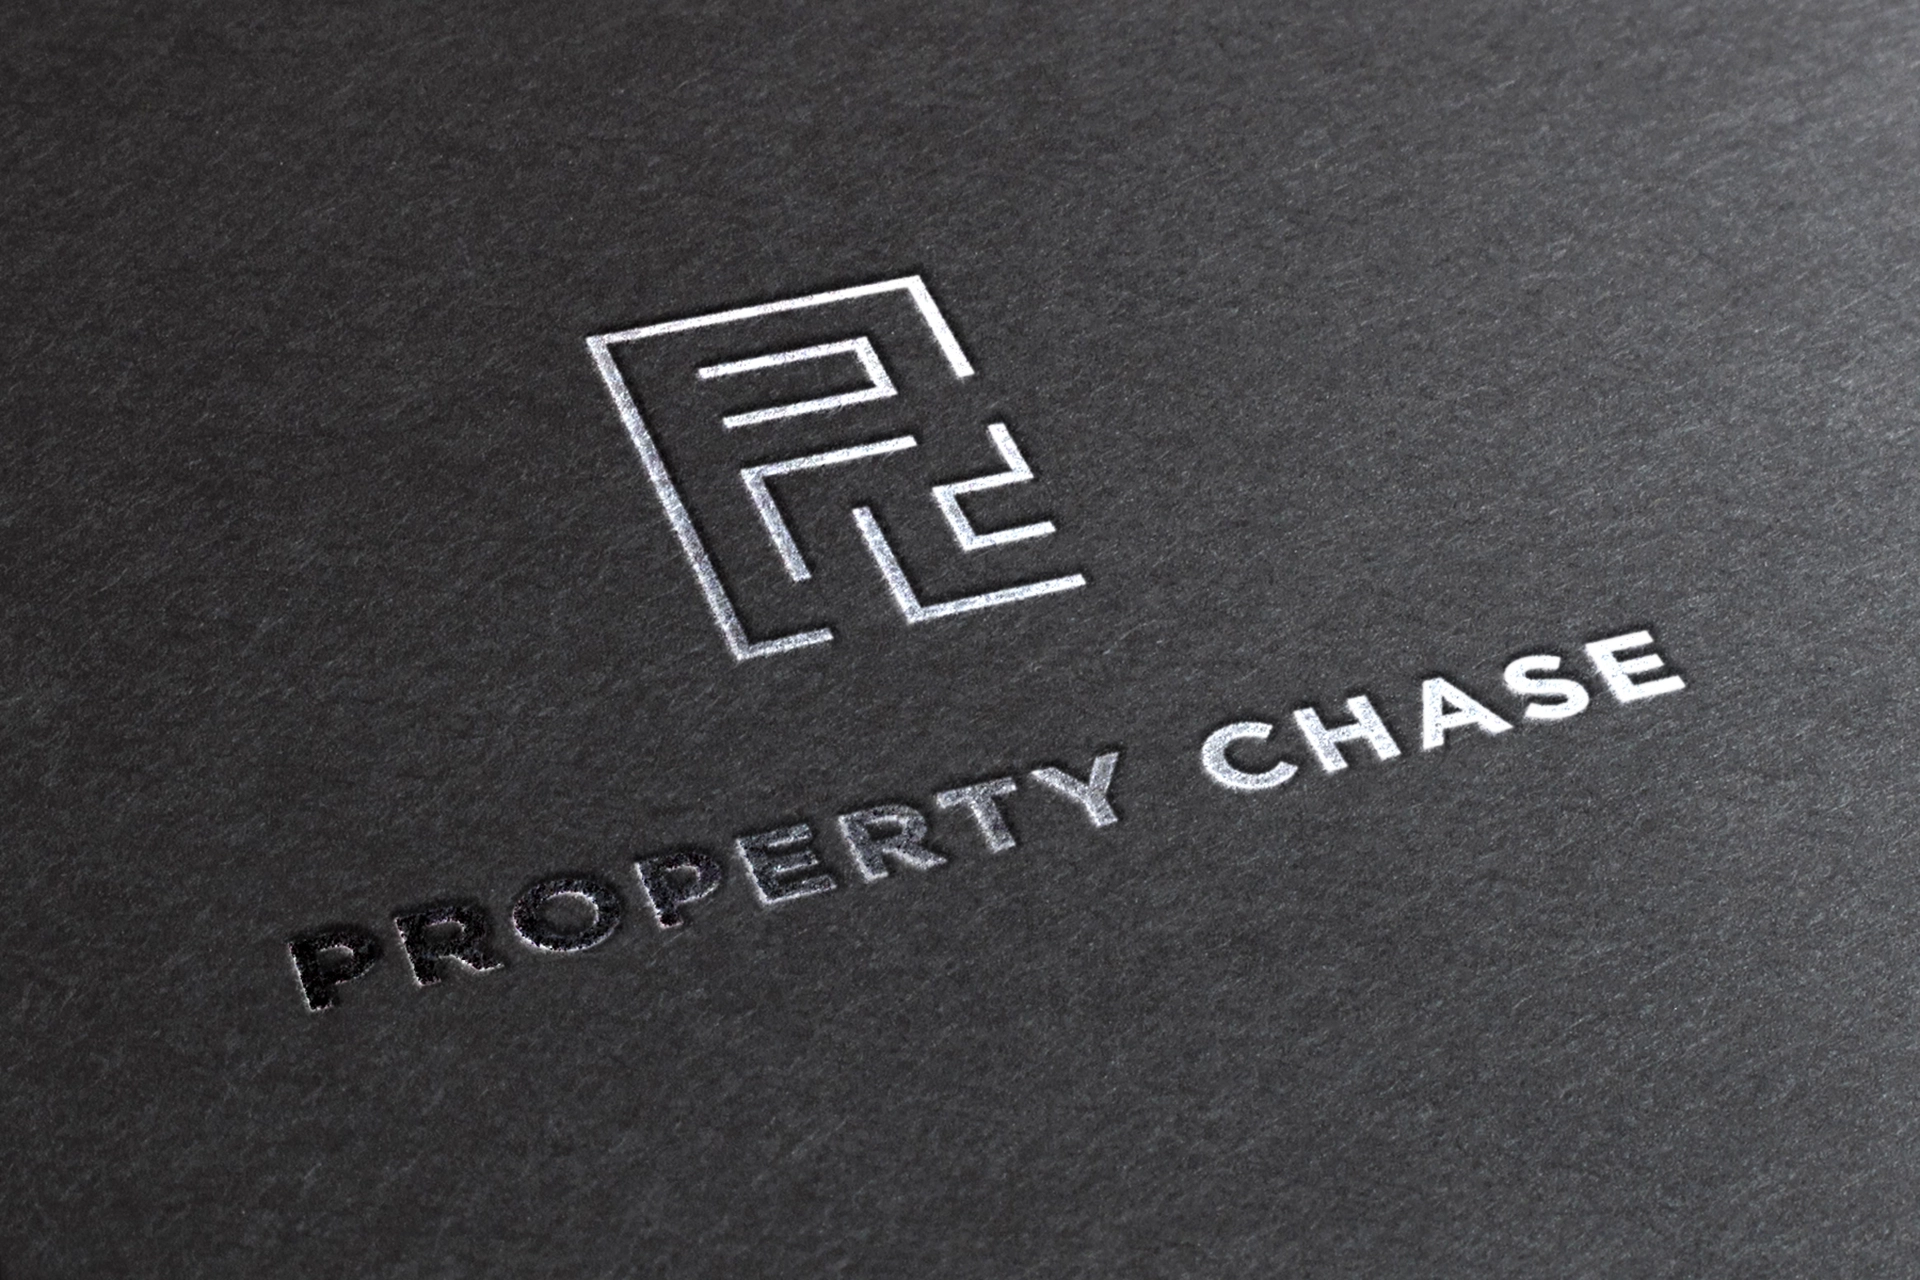 Property Chase